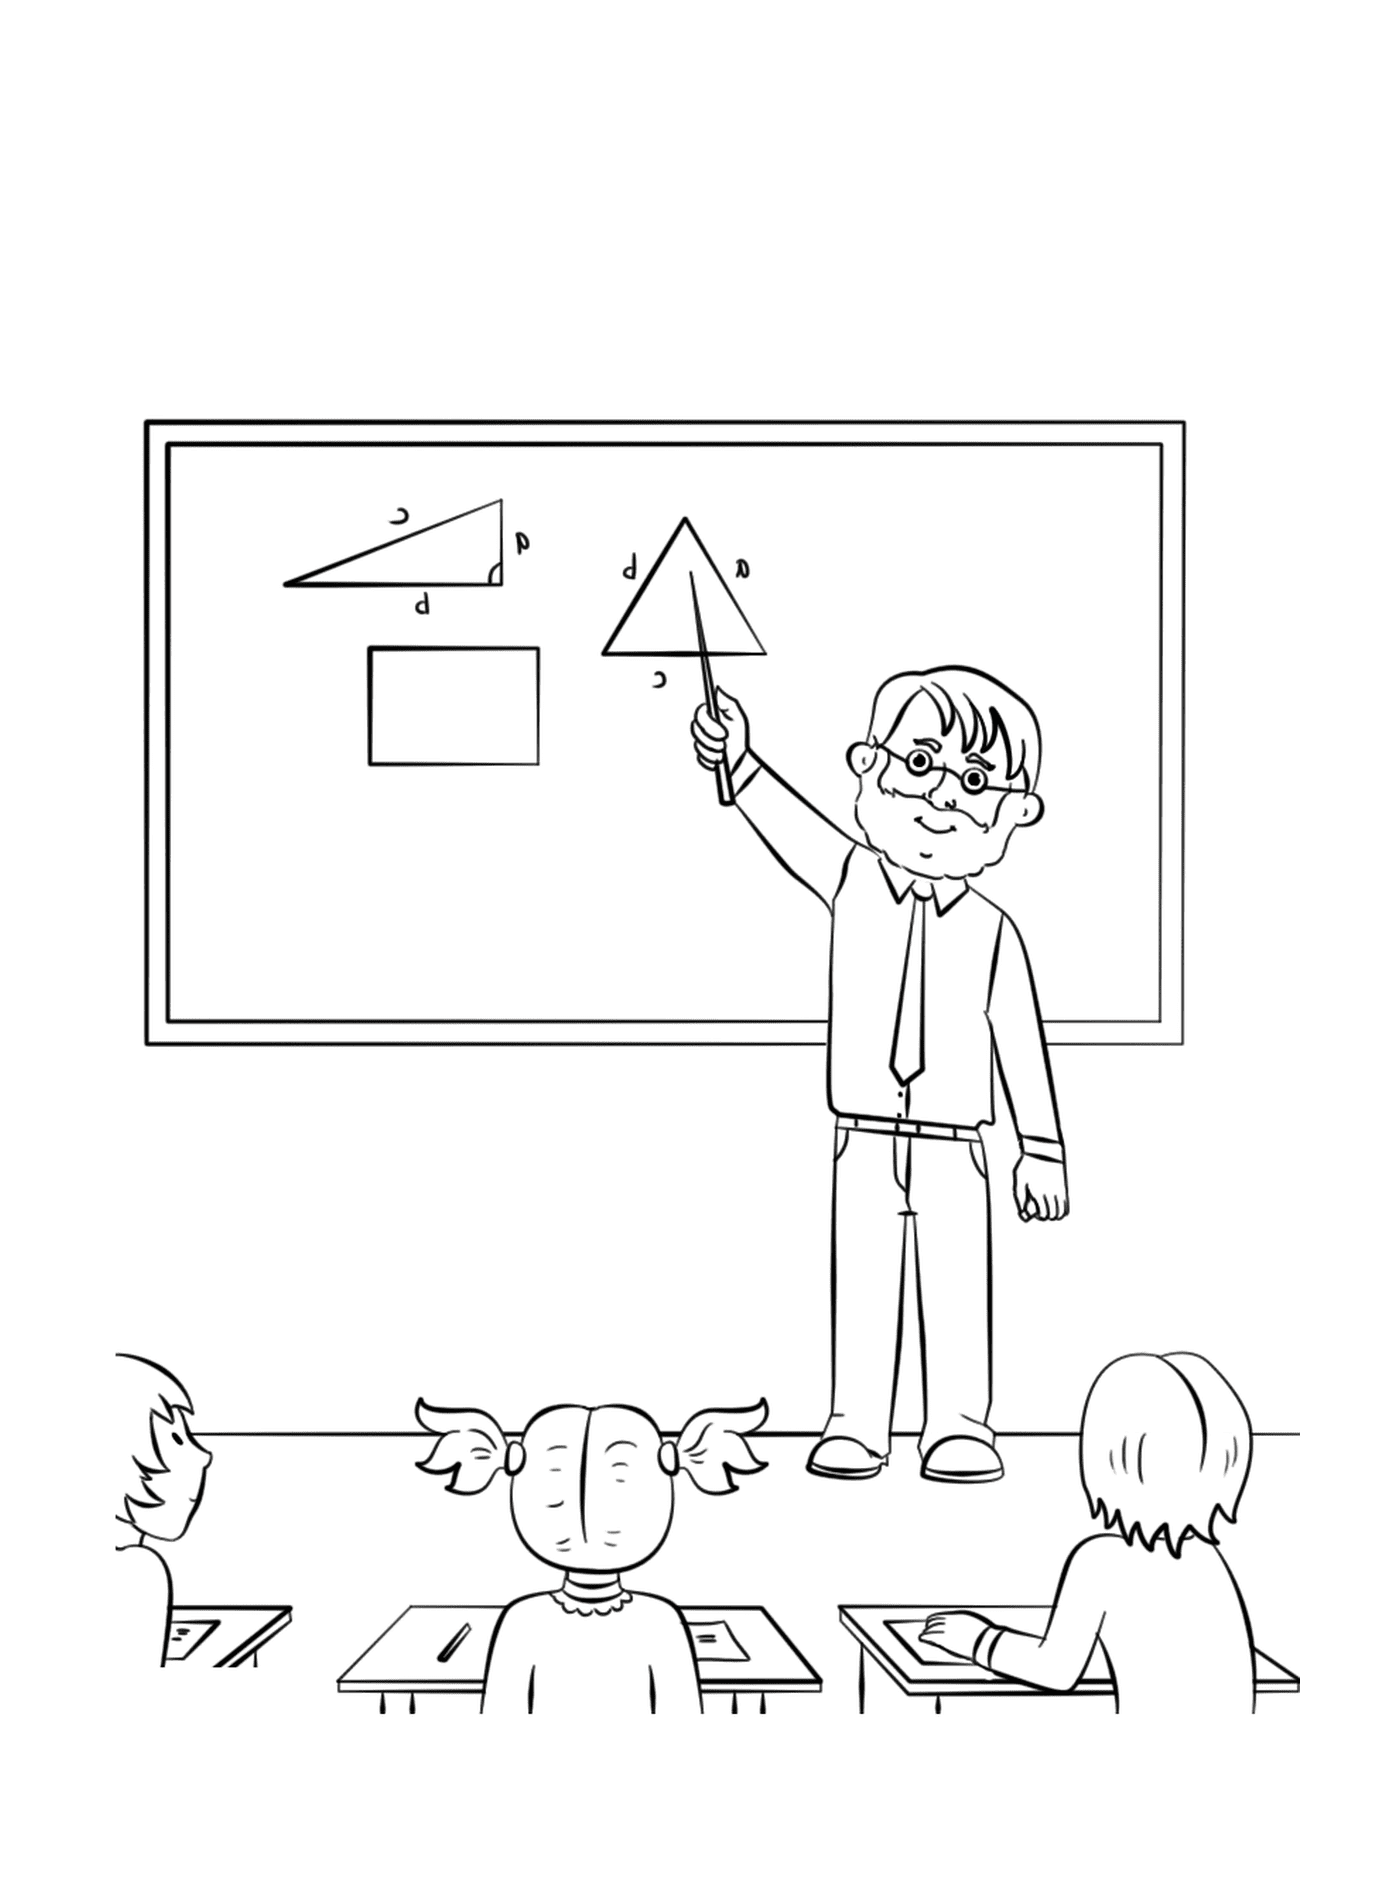  Teacher pointing a triangle 